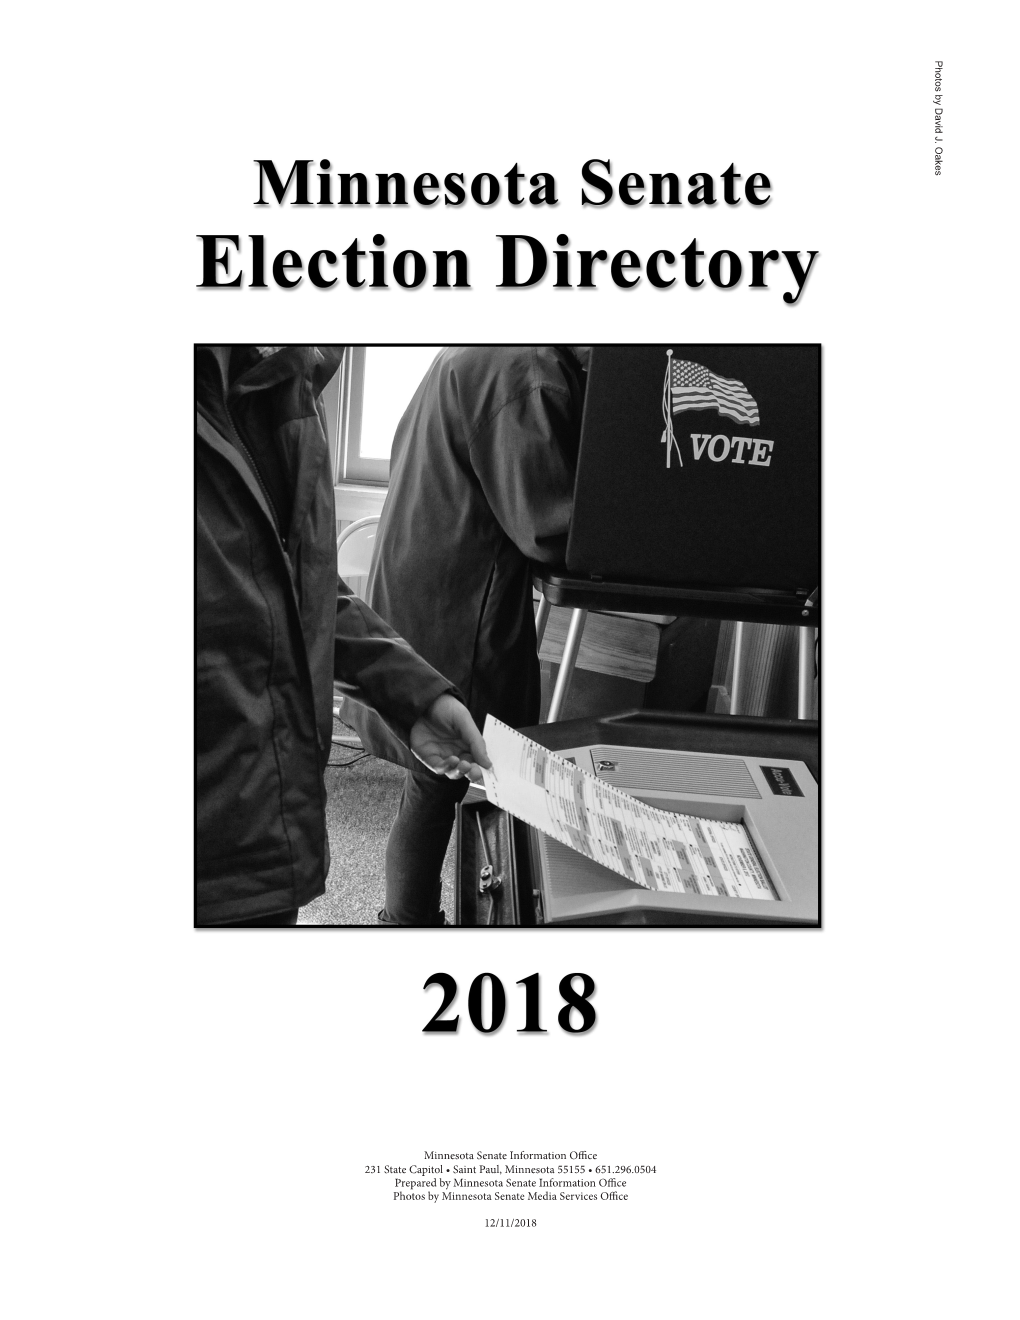 Minnesota Senate Information Office 231 State Capitol • Saint Paul, Minnesota 55155 • 651.296.0504 Prepared by Minnesota